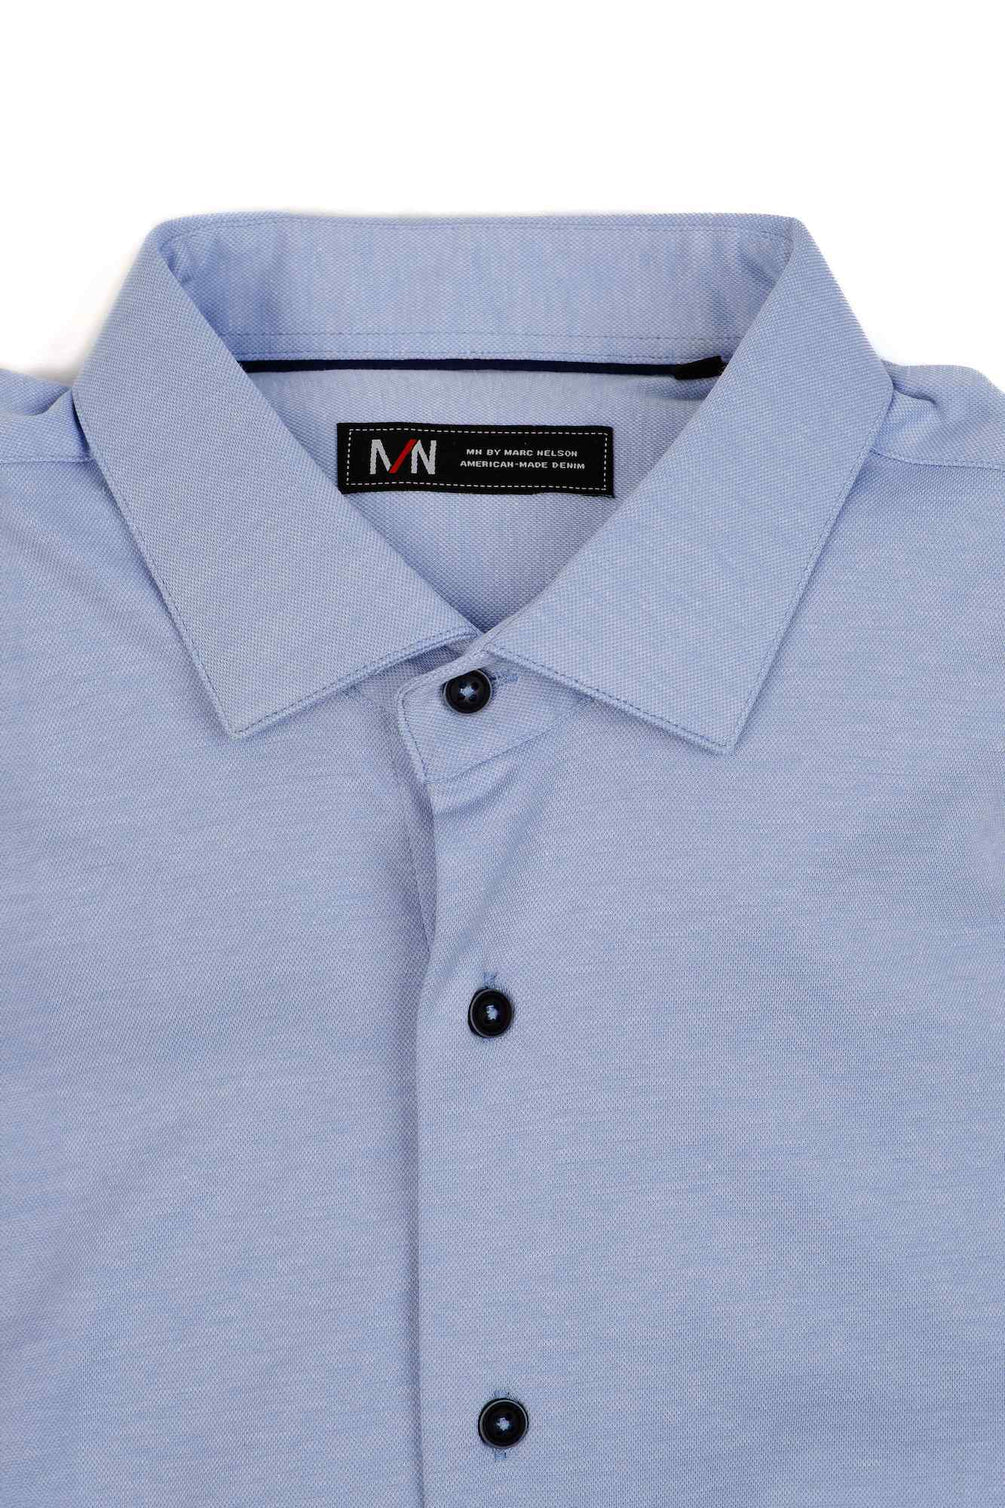 Light blue Marc Nelson knit dress shirt folded on a white background.